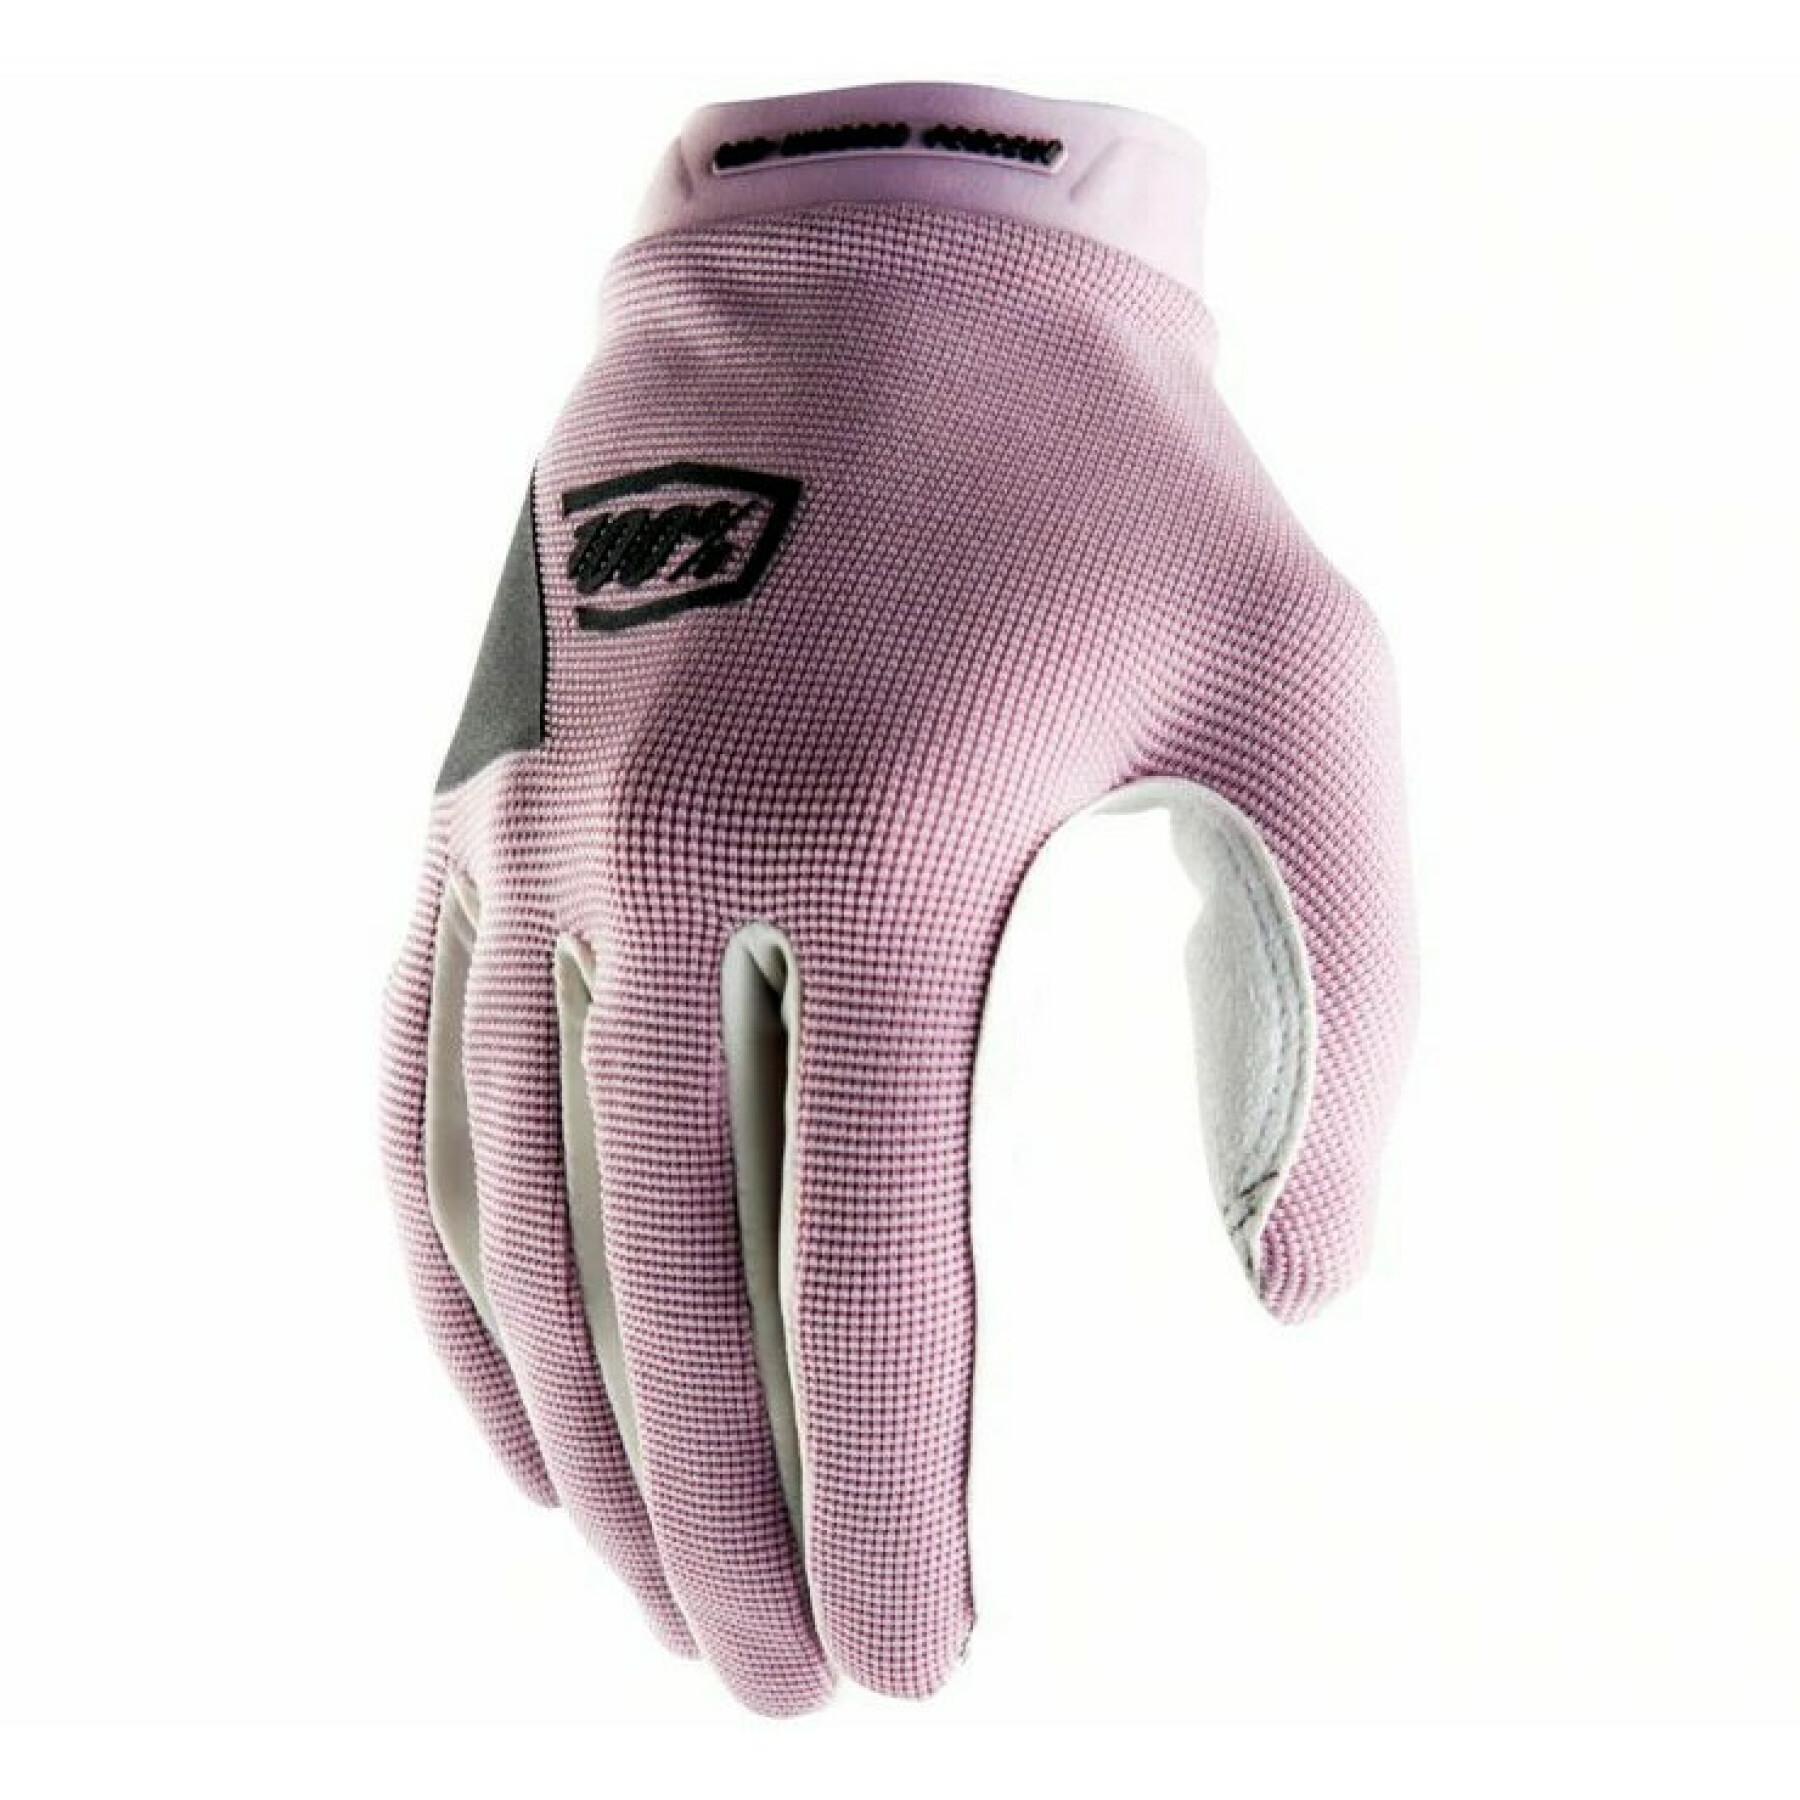 Women's gloves 100% ridecamp